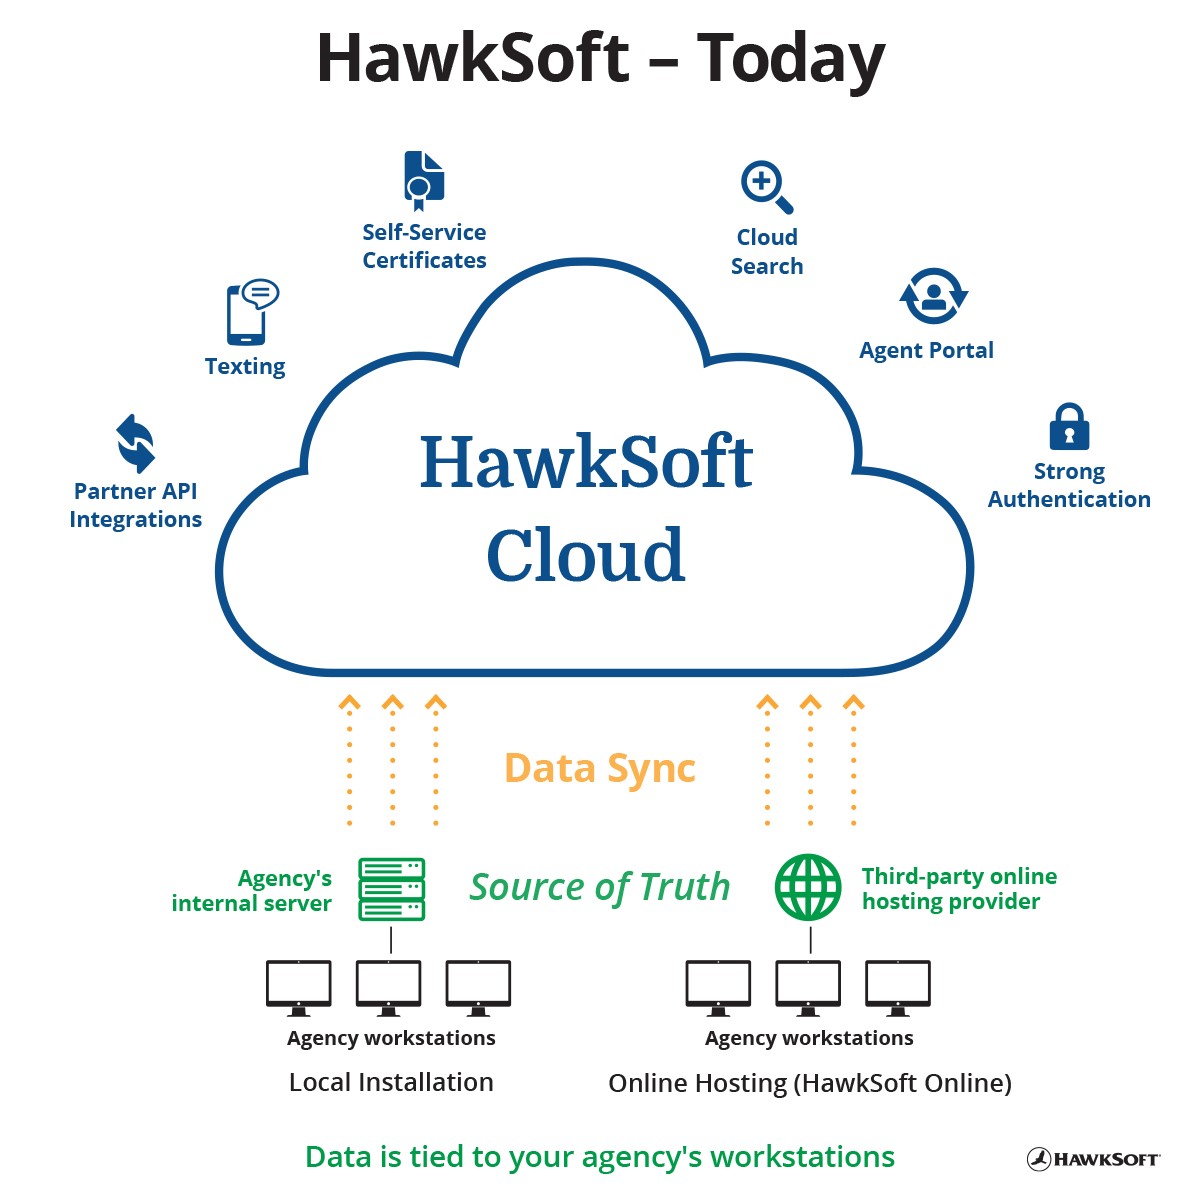 HawkSoft Cloud Diagram - Today